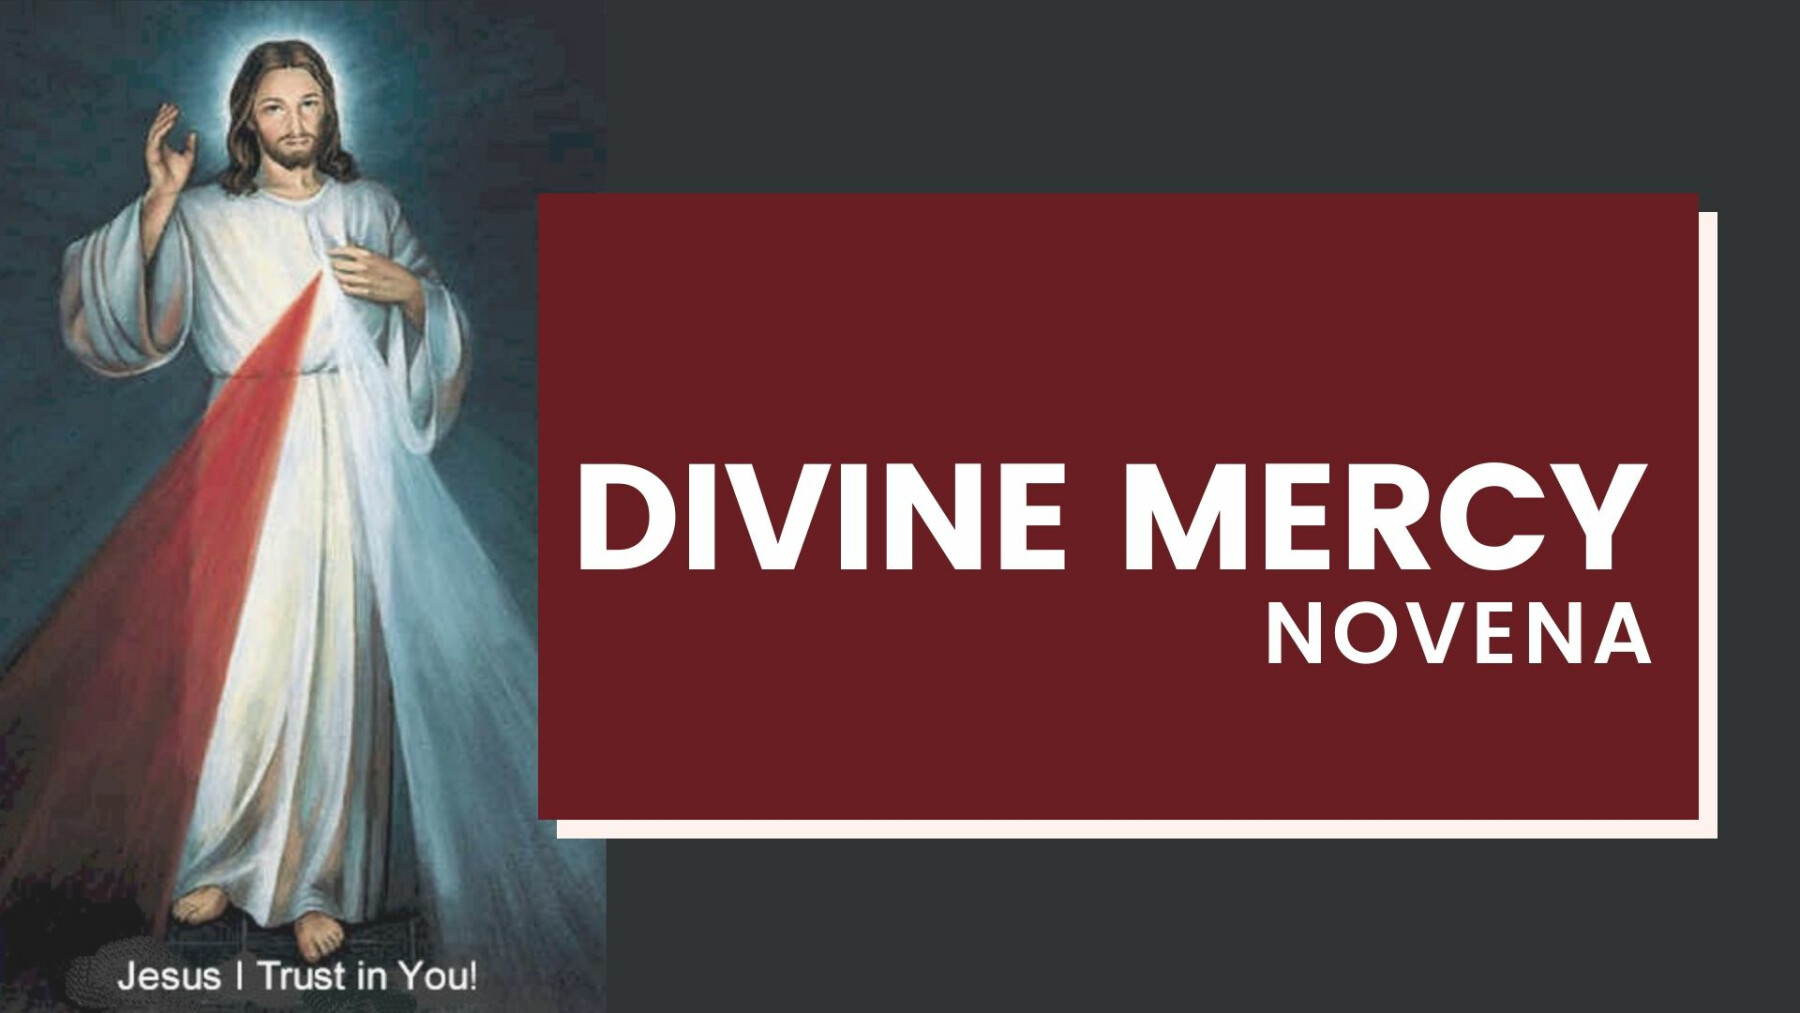 Divine Mercy Novena Begins